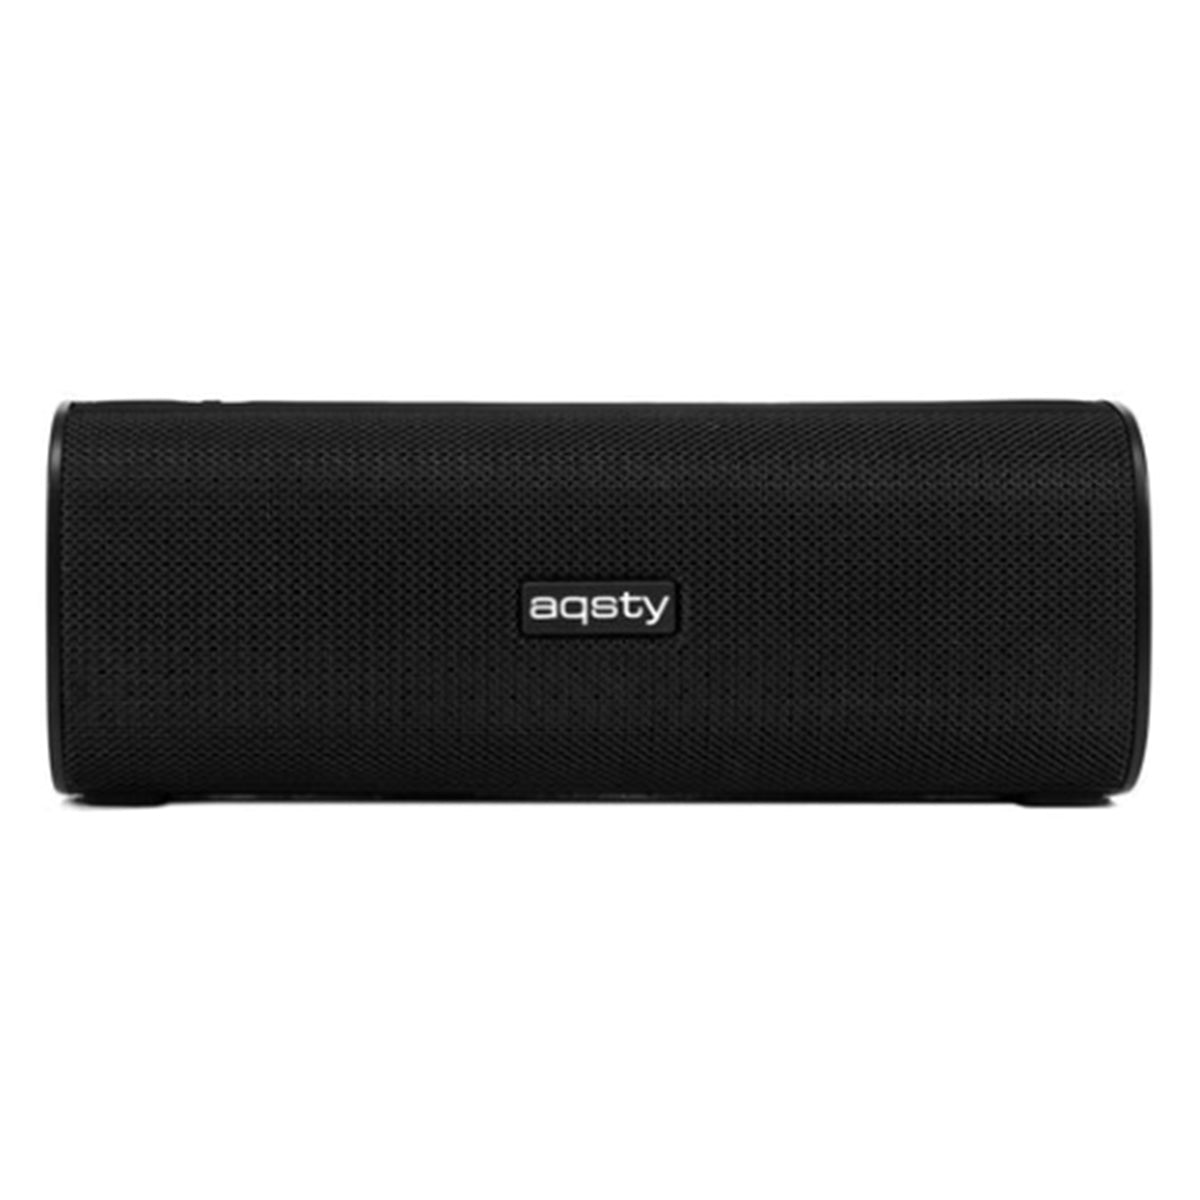 Aqsty altavoces Bluetooth portátiles - Aqsty Portable Bluetooth Speakers